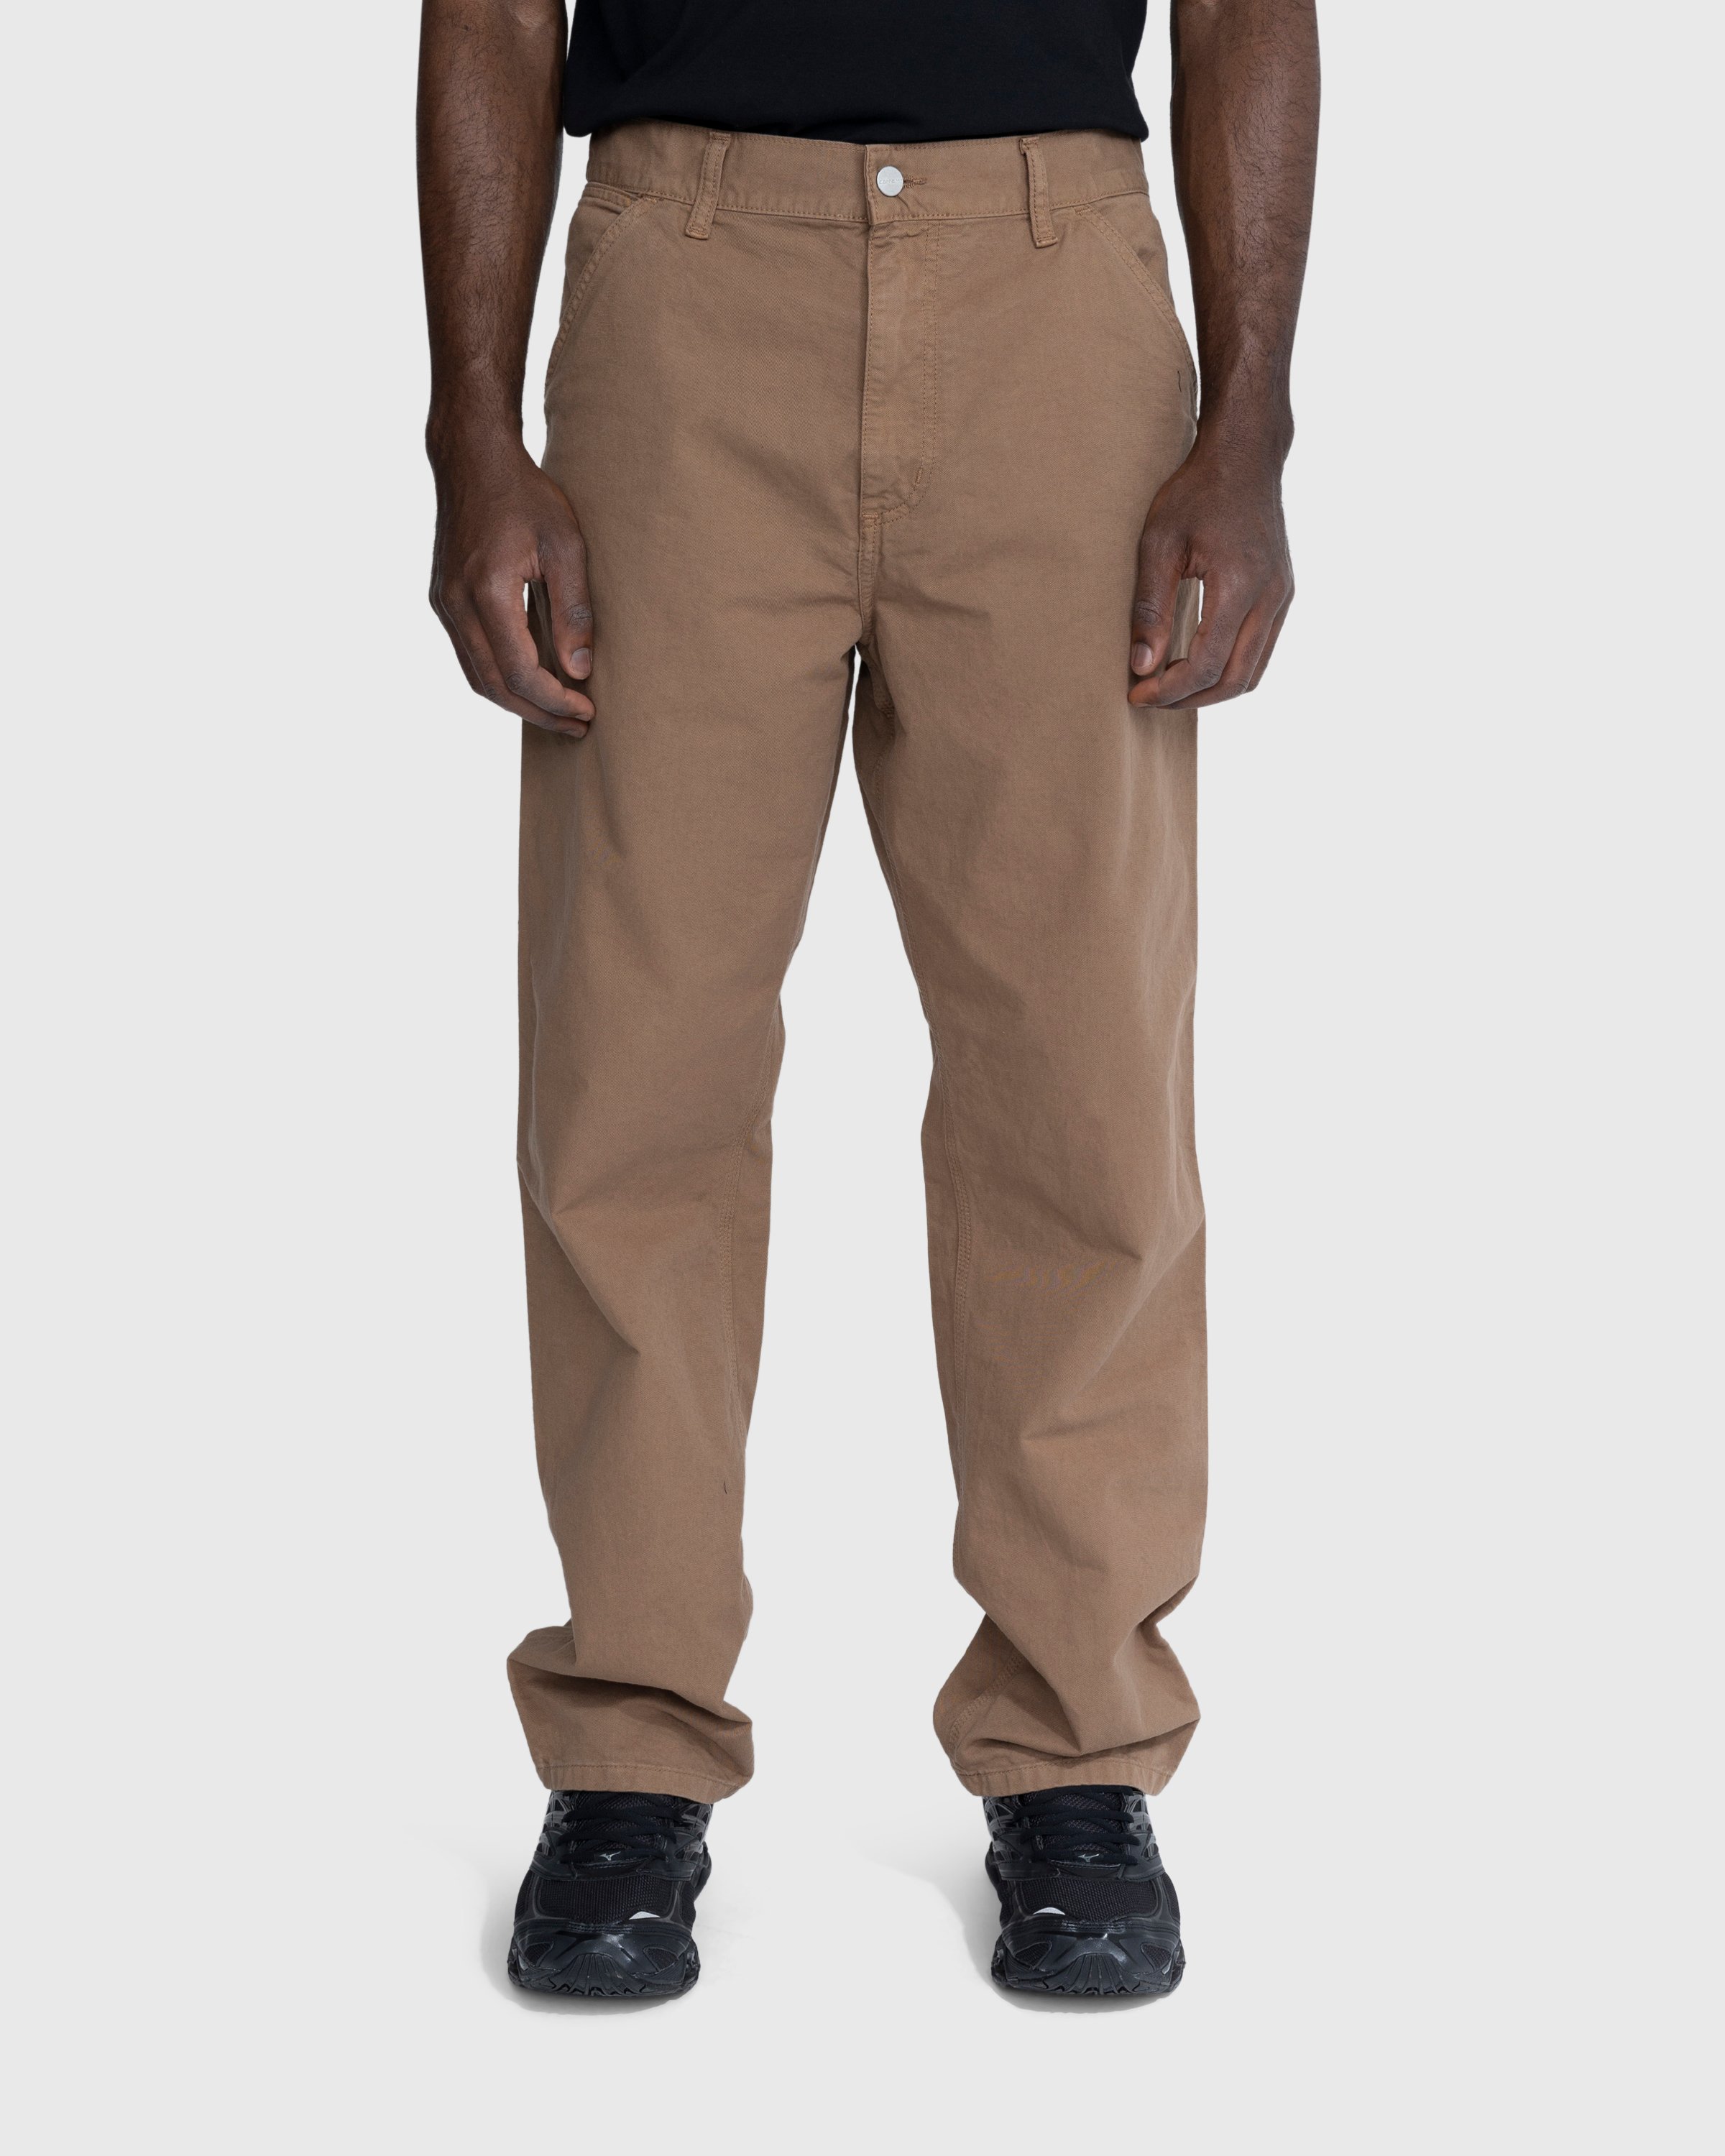 Carhartt WIP - Single Knee Pant Buffalo - Clothing - Brown - Image 2